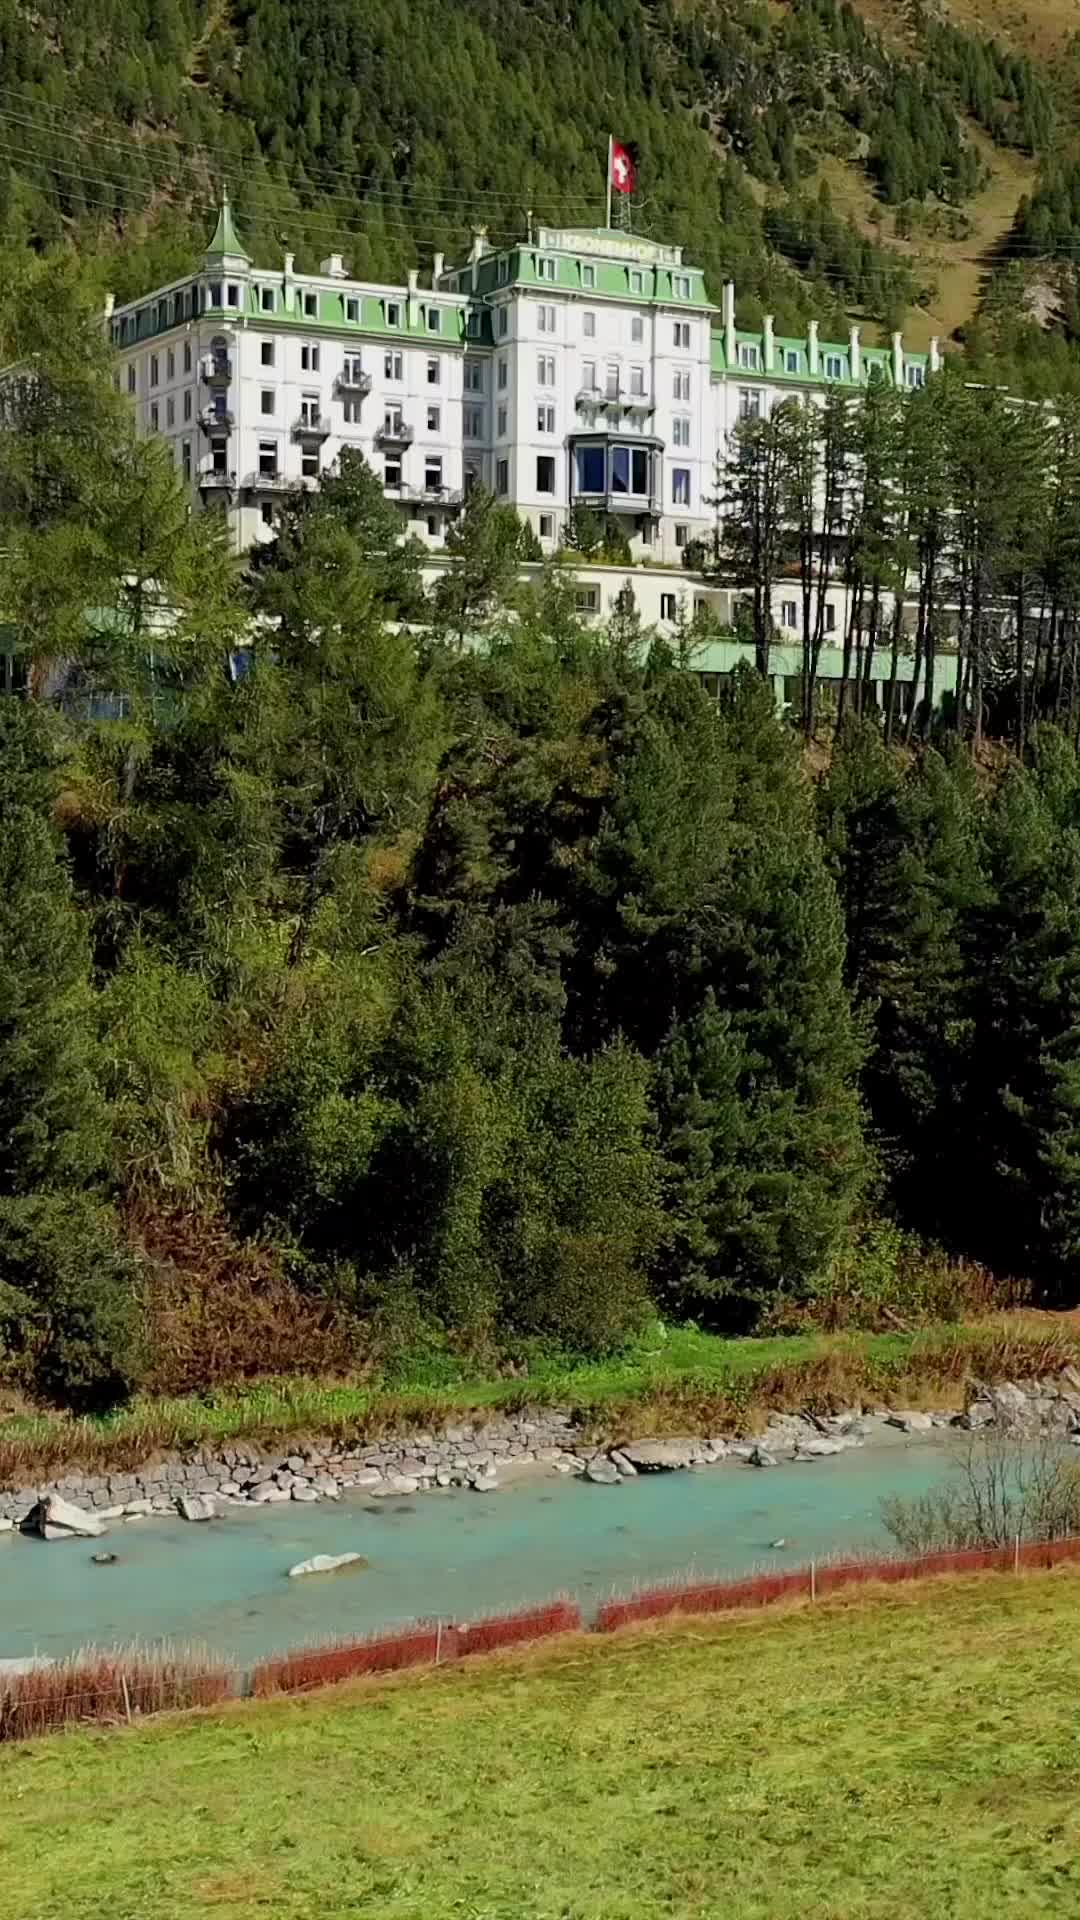 Luxurious Stay at Grand Hotel Kronenhof, Switzerland